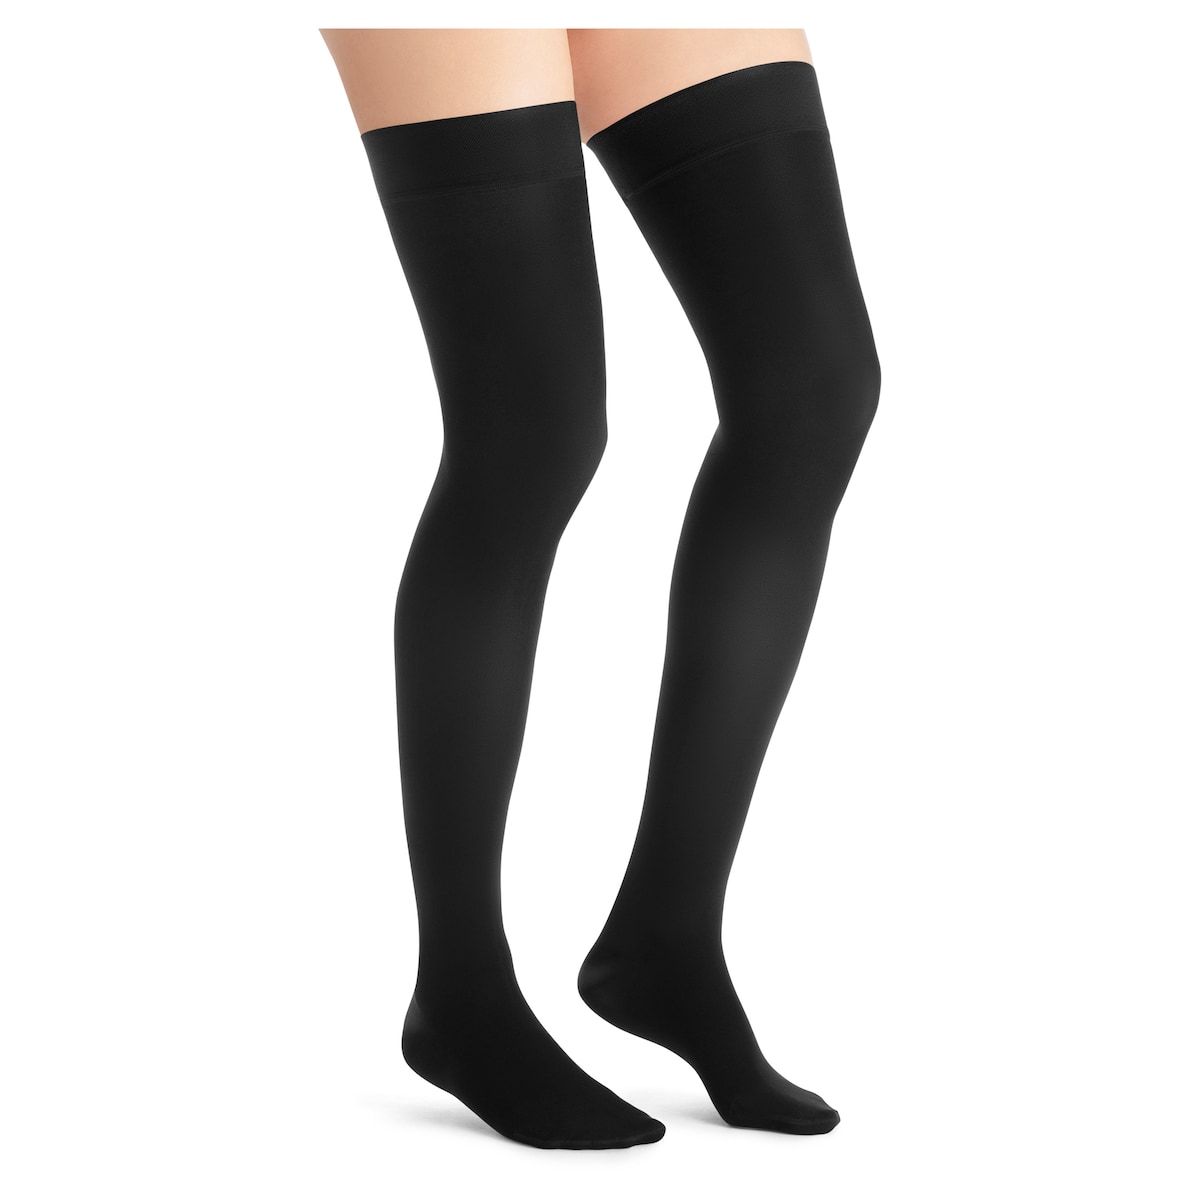 Jobst Ultrasheer Compression Stockings Knee High 15-20 Mmhg Natural M